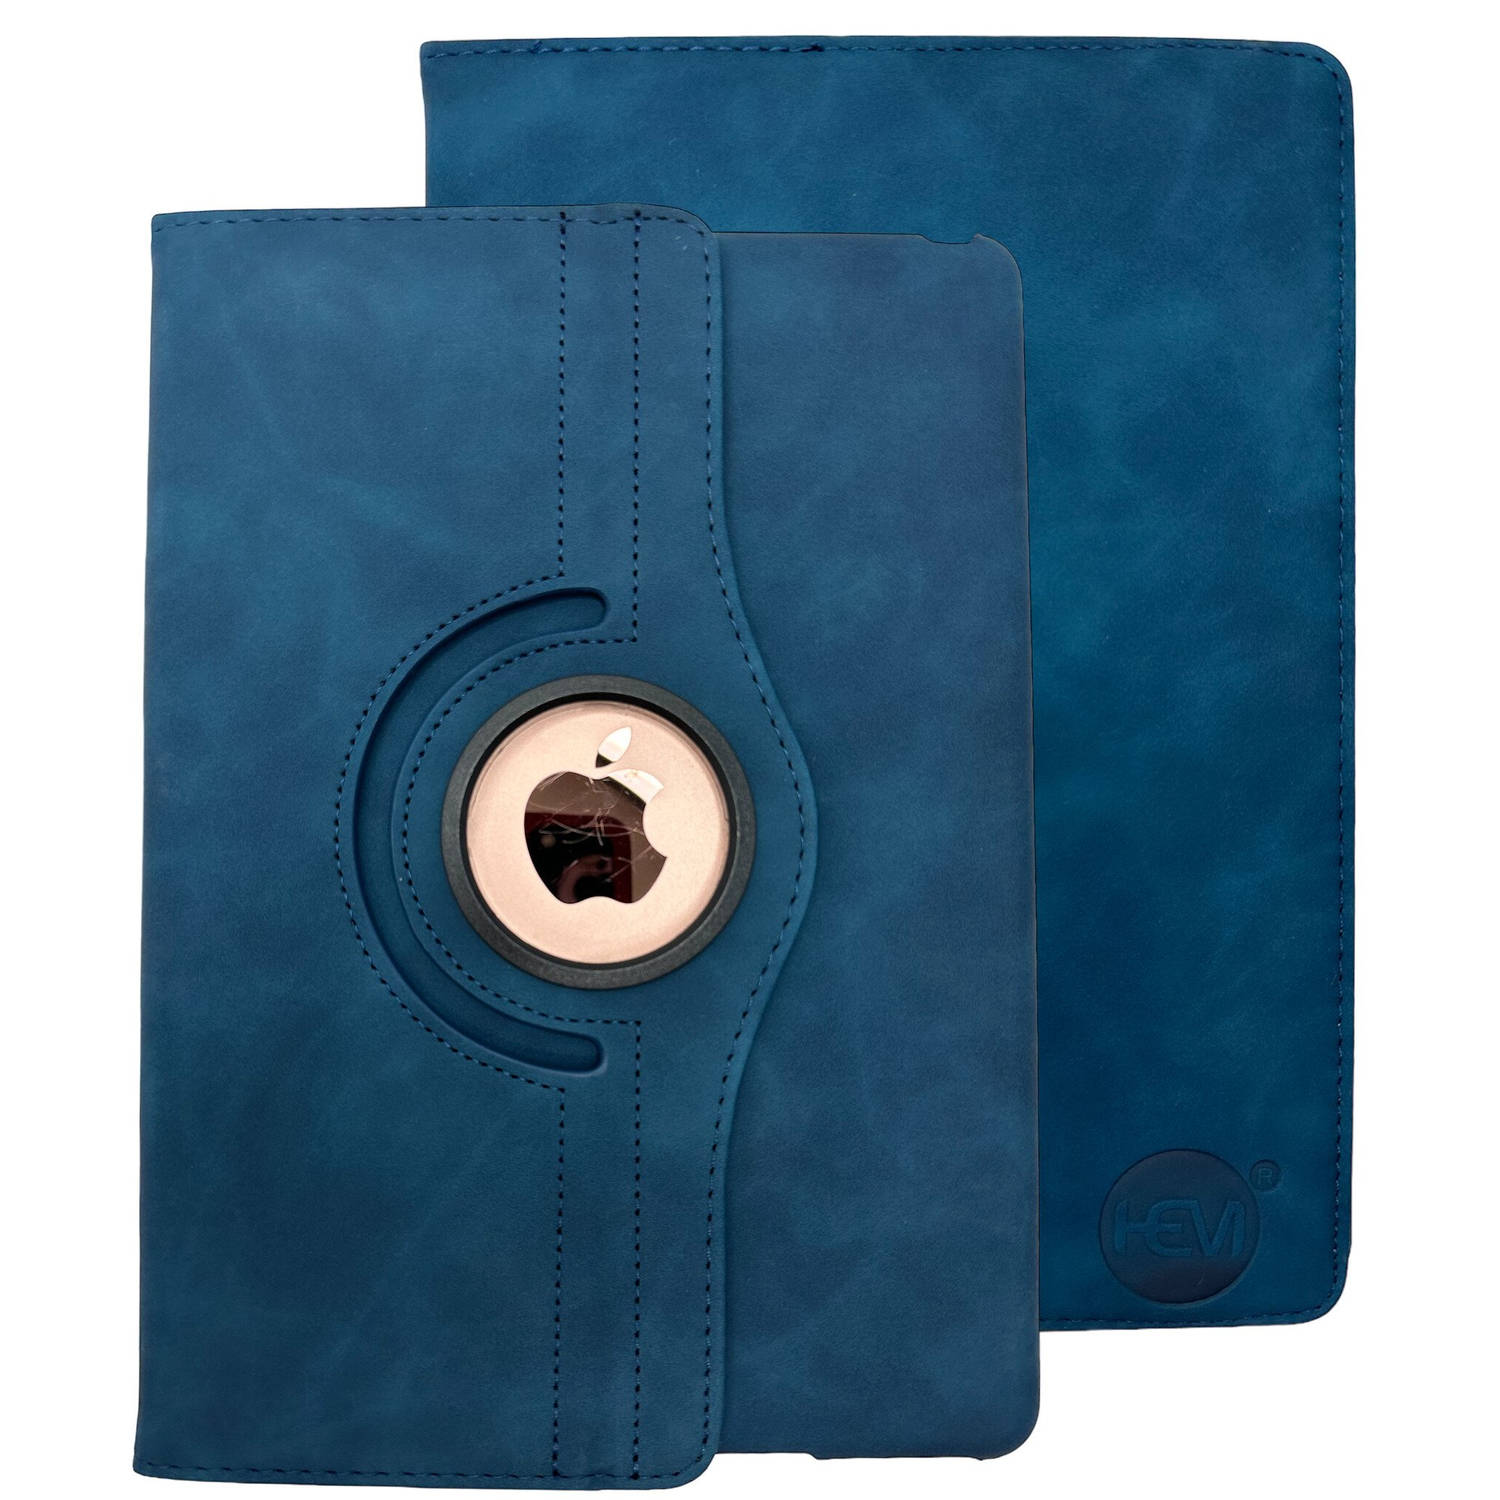 HEM Silky Dark Blue iPad hoes geschikt voor iPad 10.2 (2019 / 2020 / 2021) - 10.2 inch Draaibare Autowake Cover - iPad 2019 / 2020 / 2021 hoes - iPad 7 / 8 / 9 Hoes - 7e / 8e / 9e